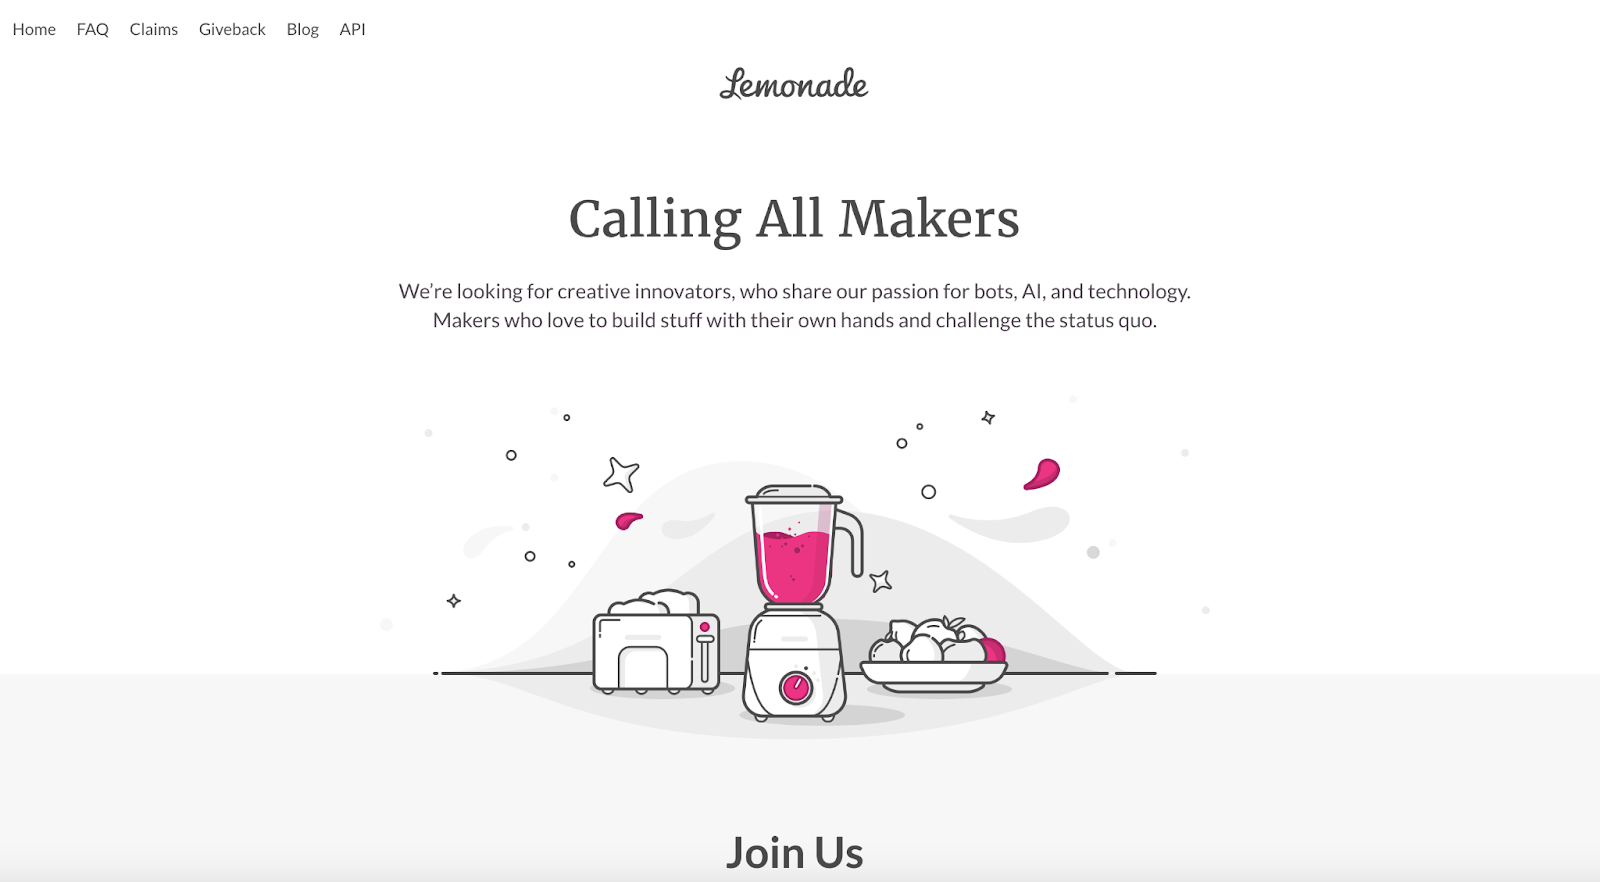 Lemonade 在其宝贵的“关于我们”页面上招募新团队成员。